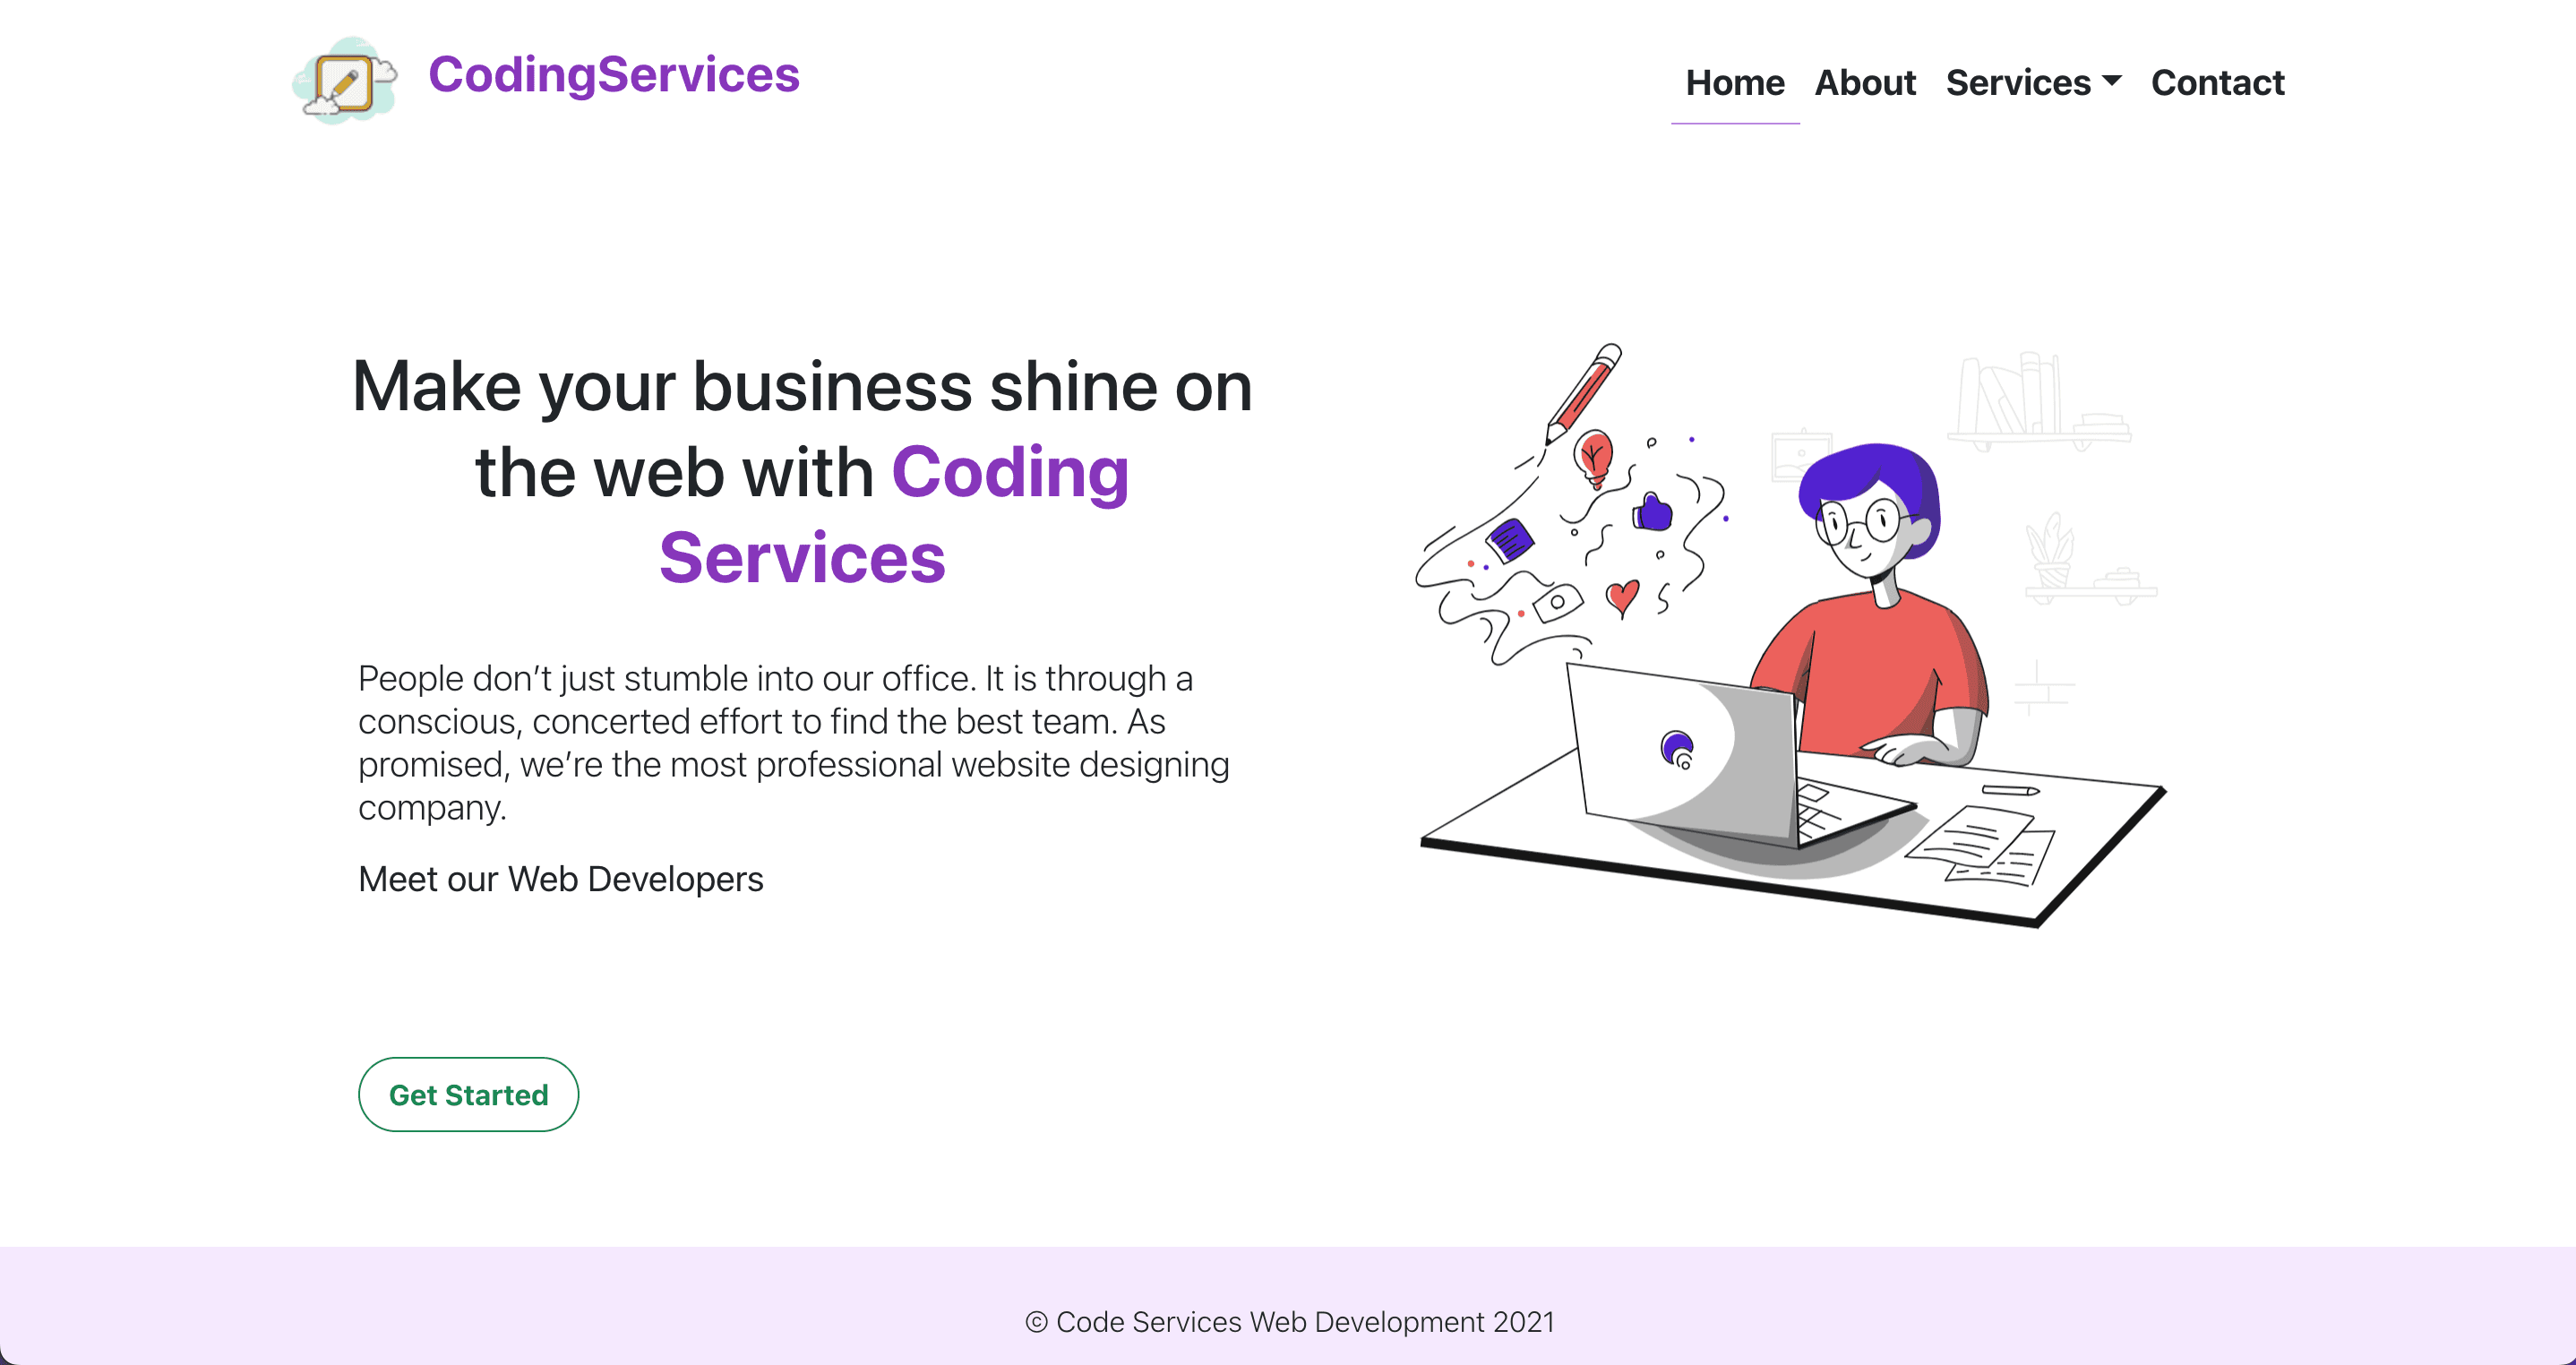 Coding Services